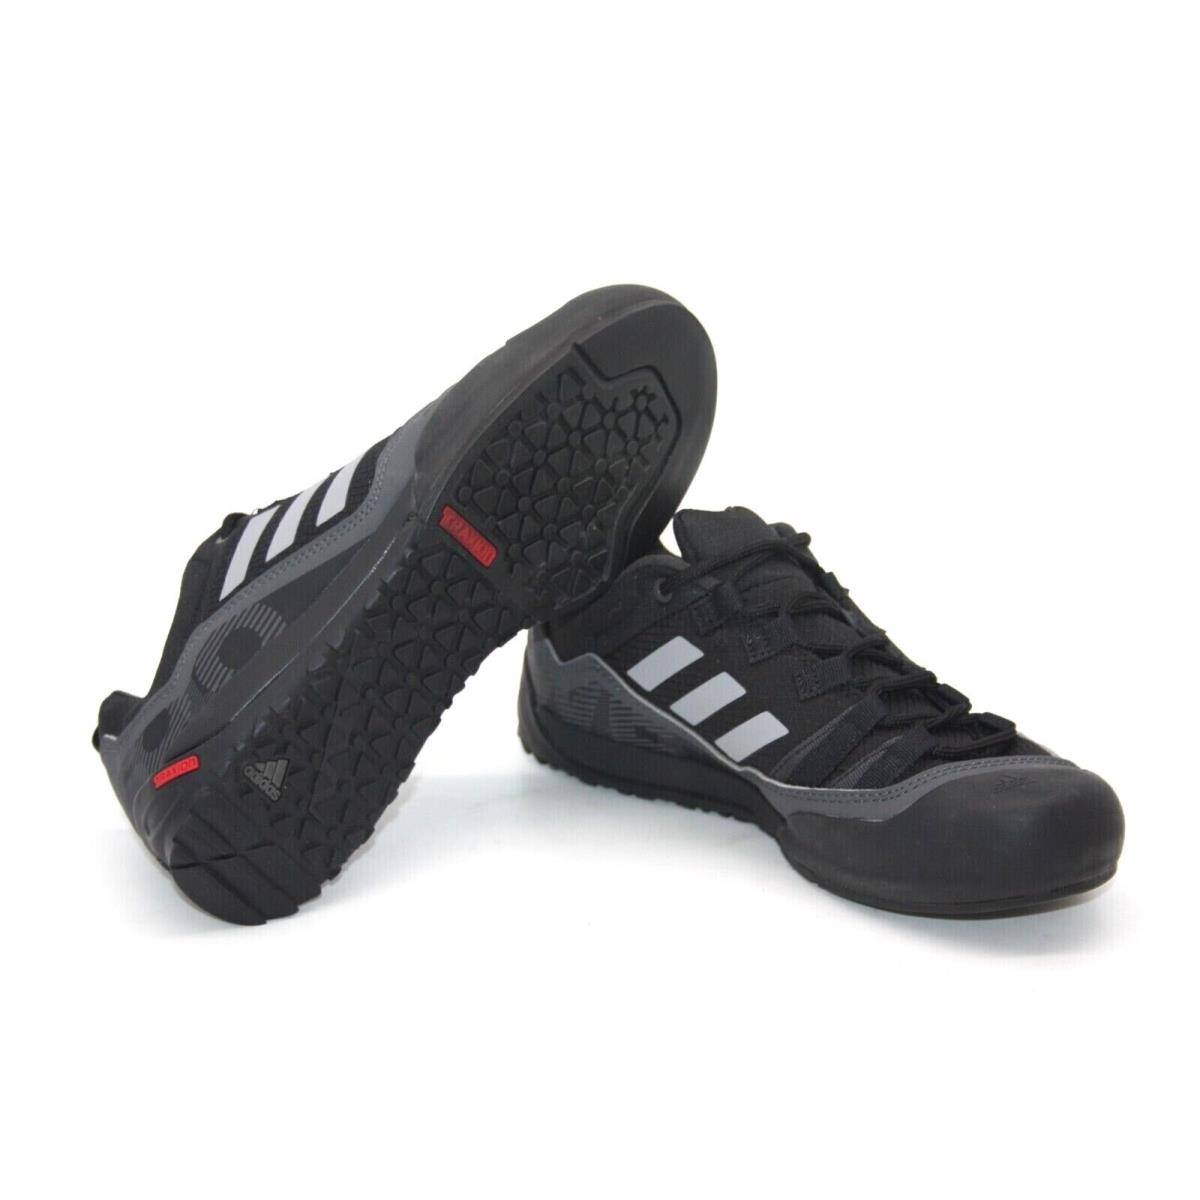 Adidas shoes Terrex Swift Solo - BLACK/BLACK/GREY 7